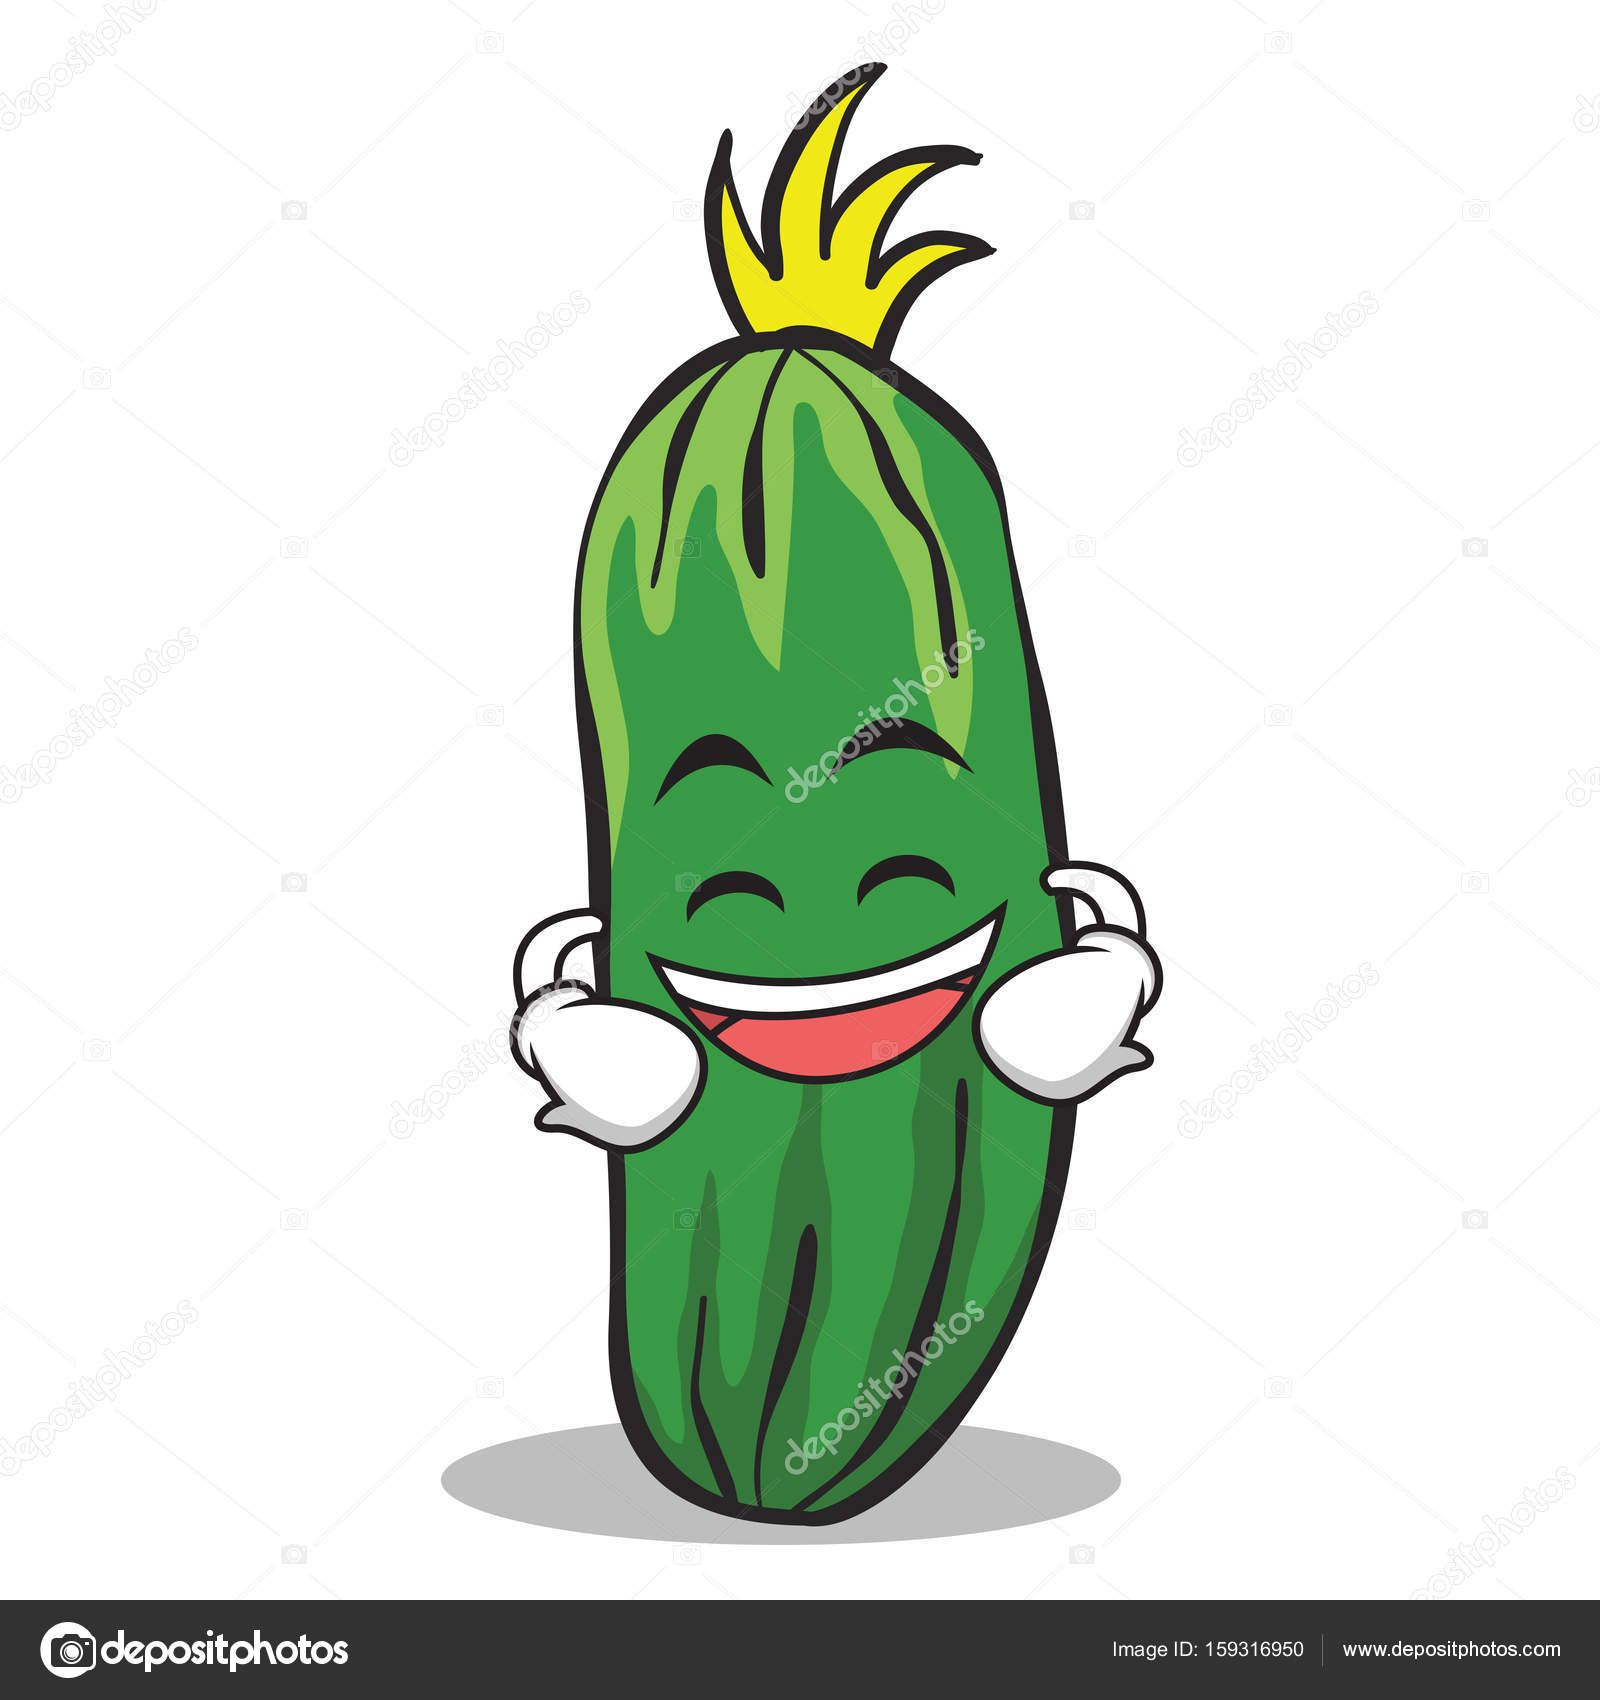 IDA Y VUELTA 09/03 Depositphotos_159316950-stock-illustration-laughing-face-cucumber-character-cartoon